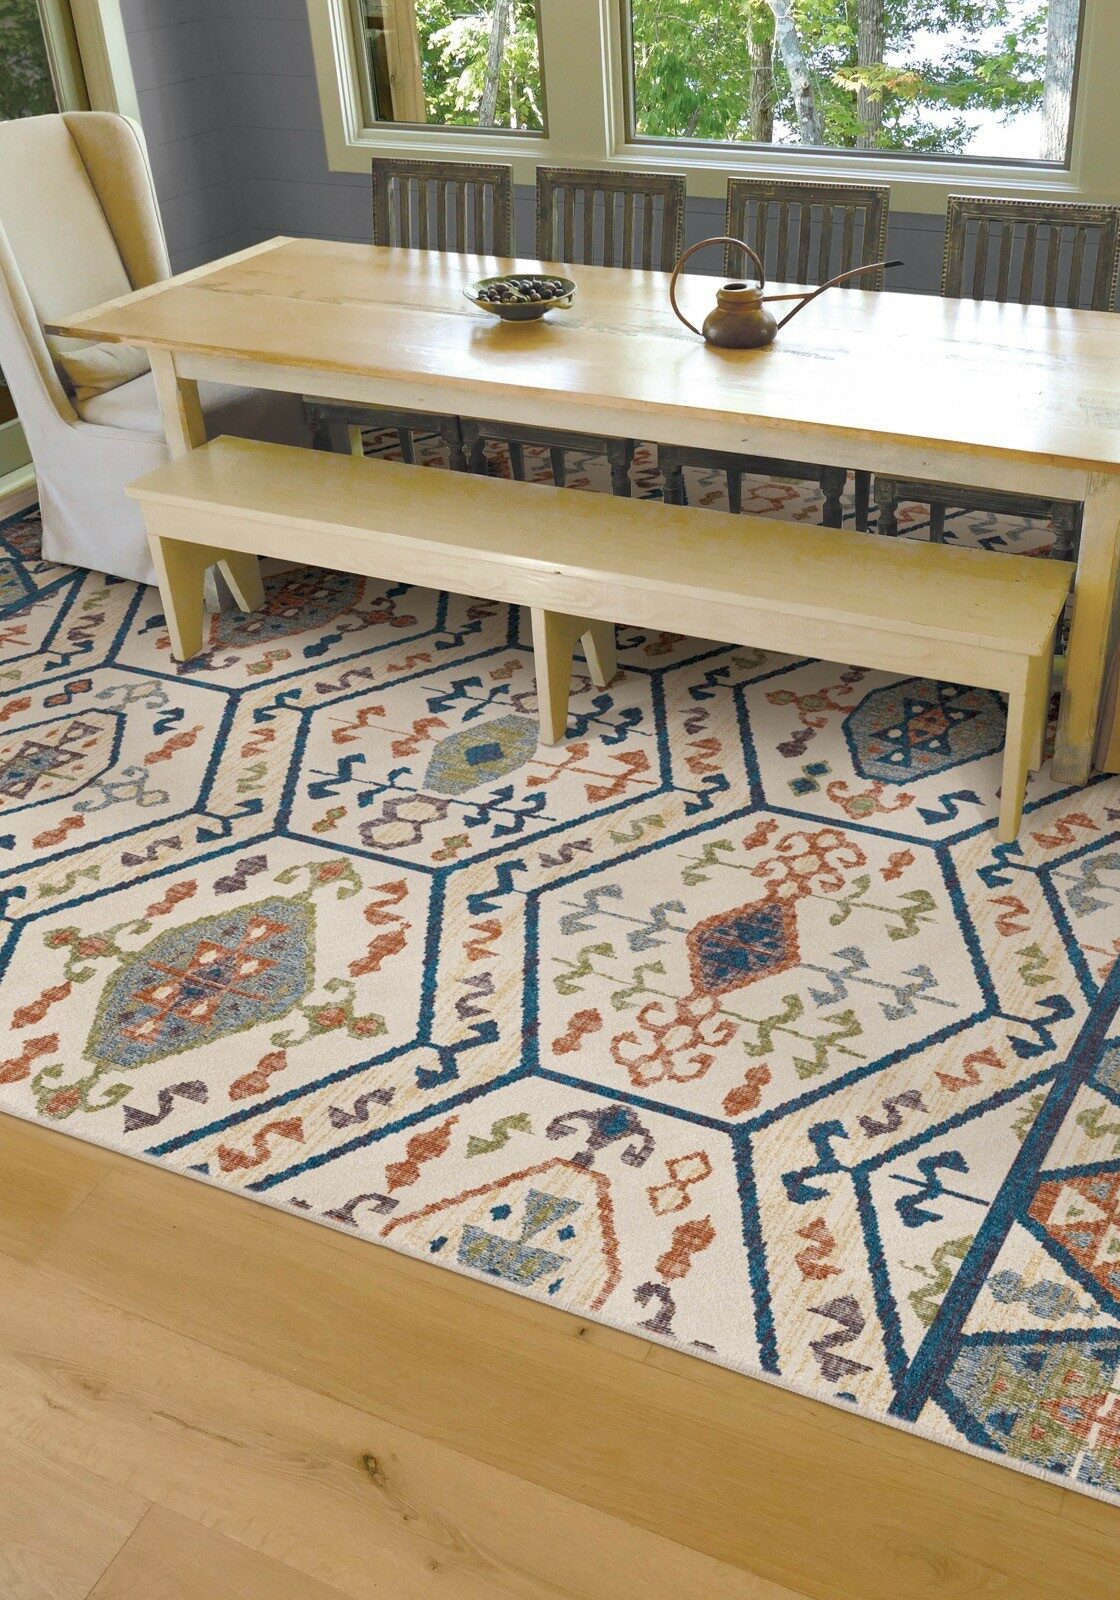 Rug design | Great Lakes Carpet & Tile